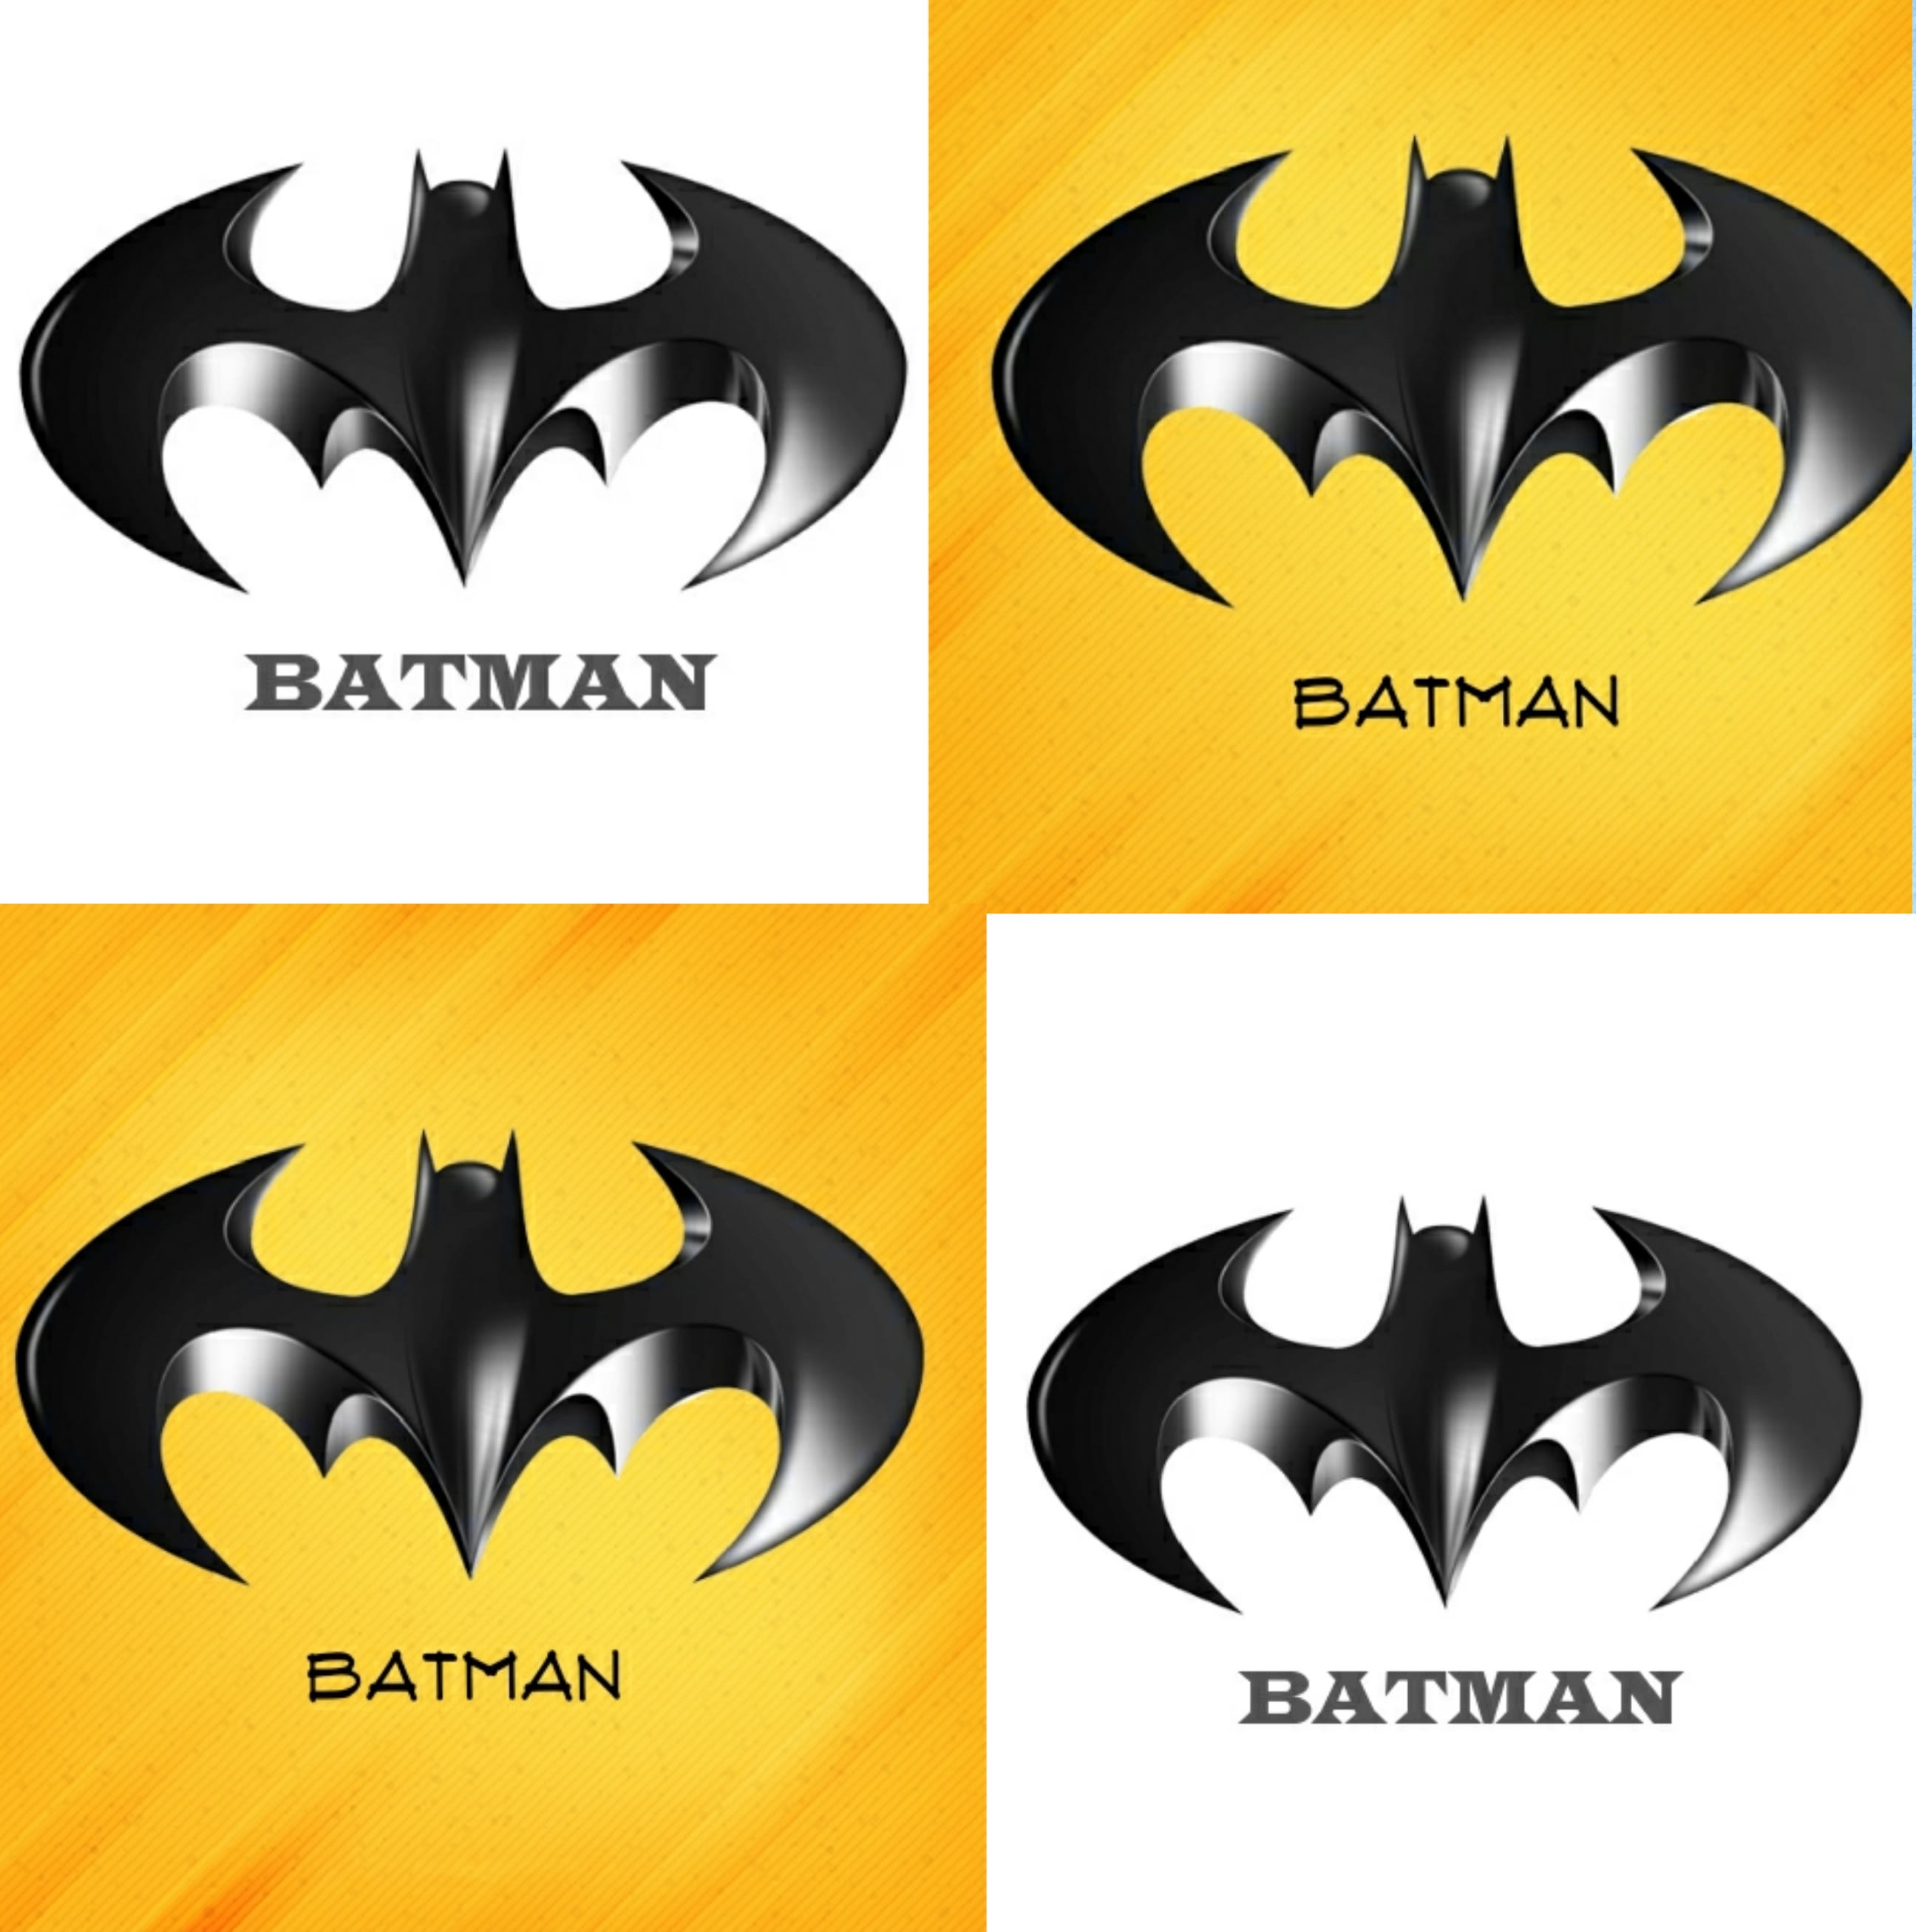 New batman logo design by Sekhardesign | Fiverr